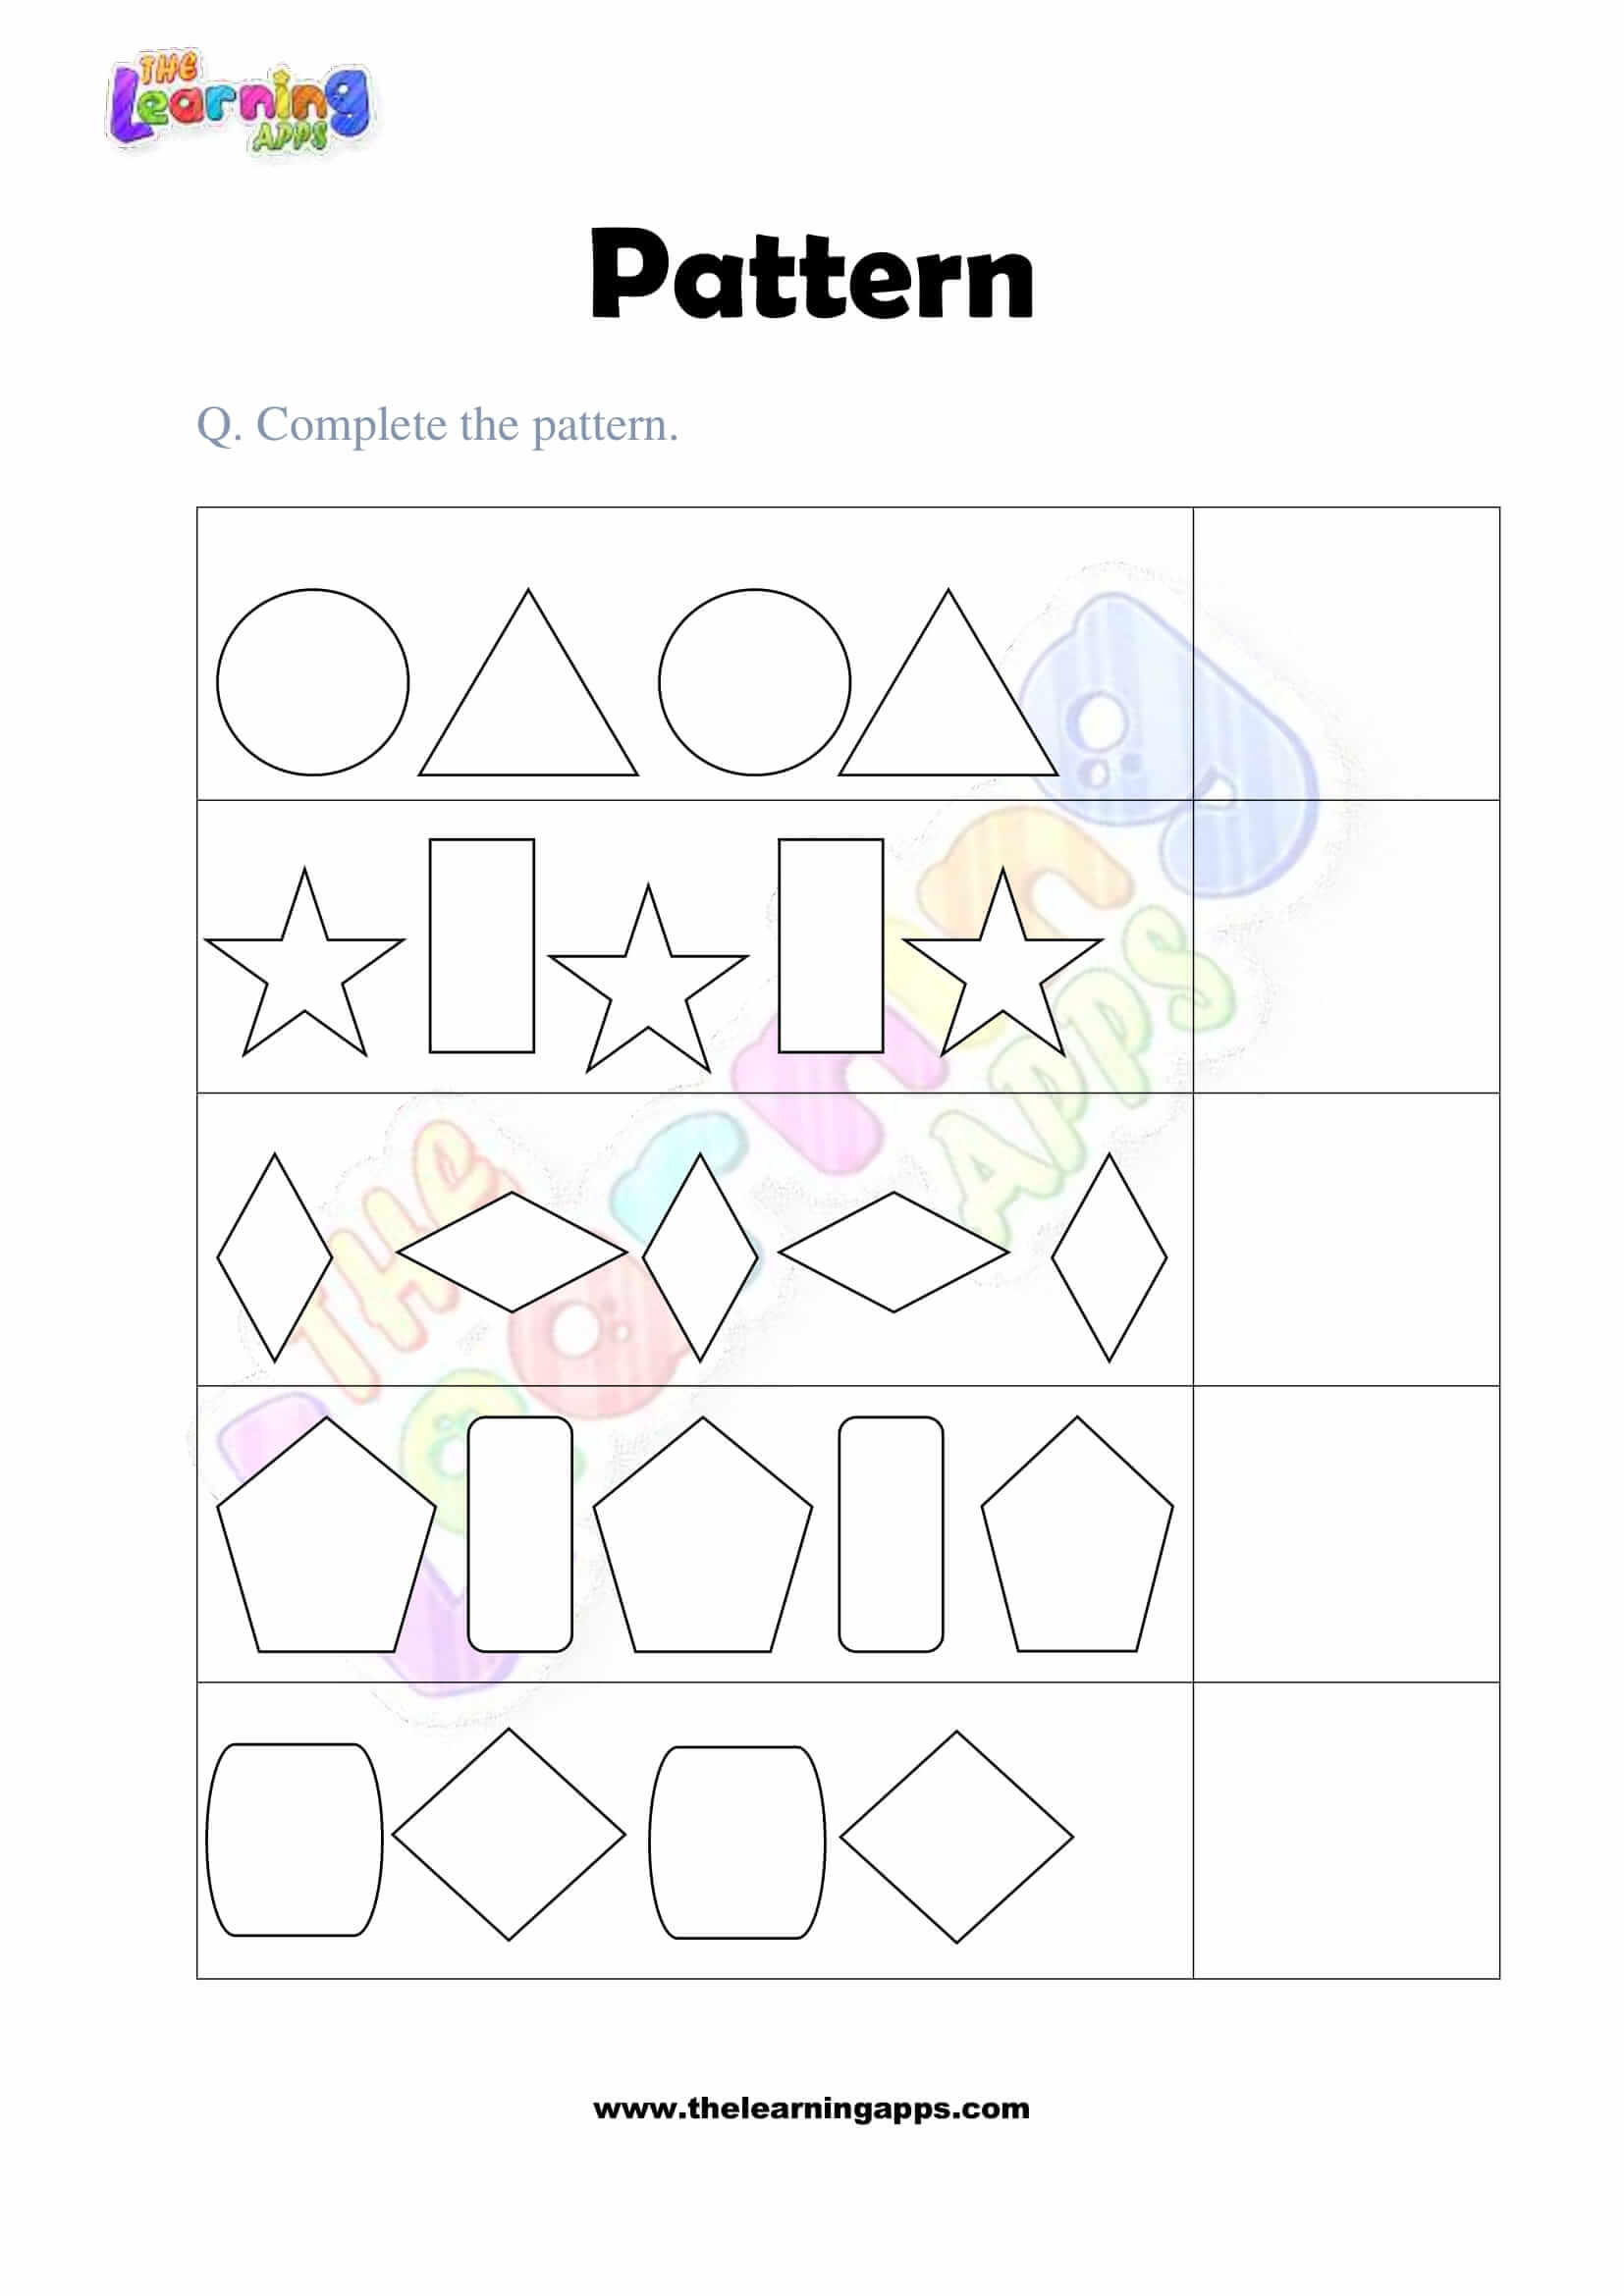 Pattern Worksheet - Grade 2 - Activity 1